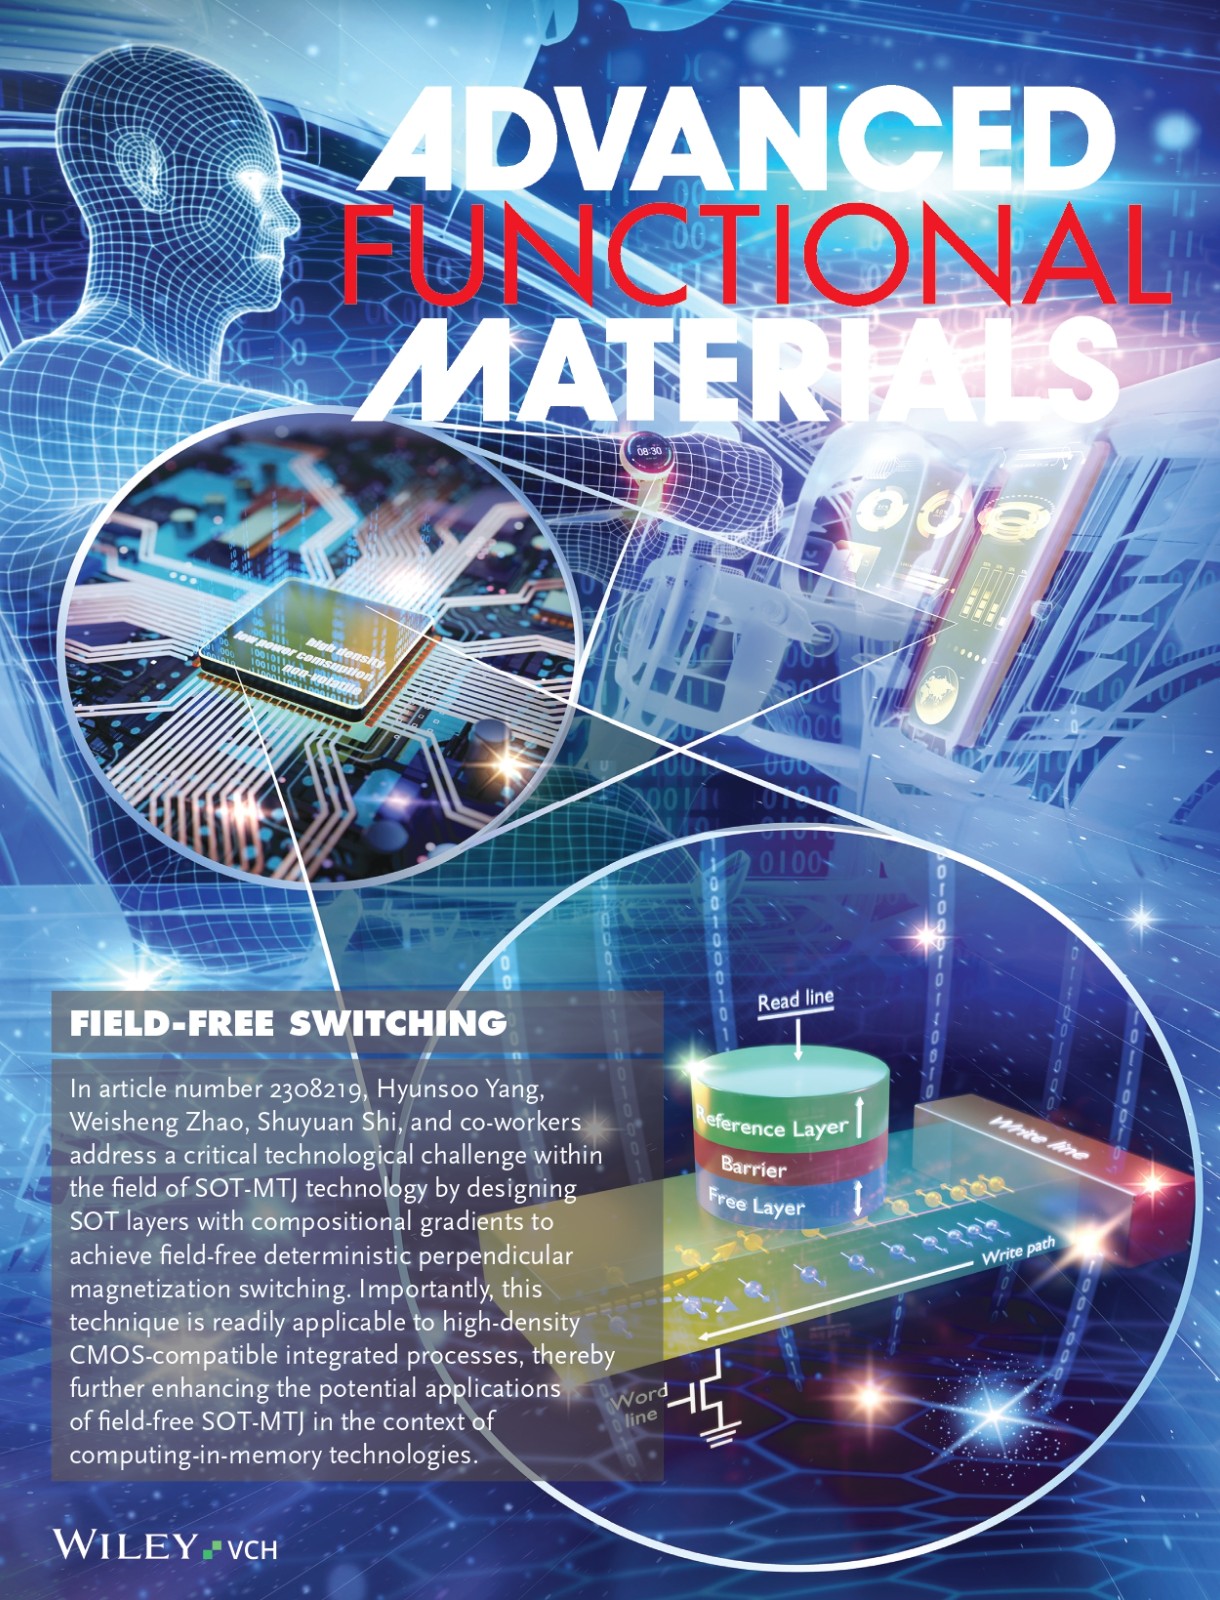 Adv Funct Materials.jpg